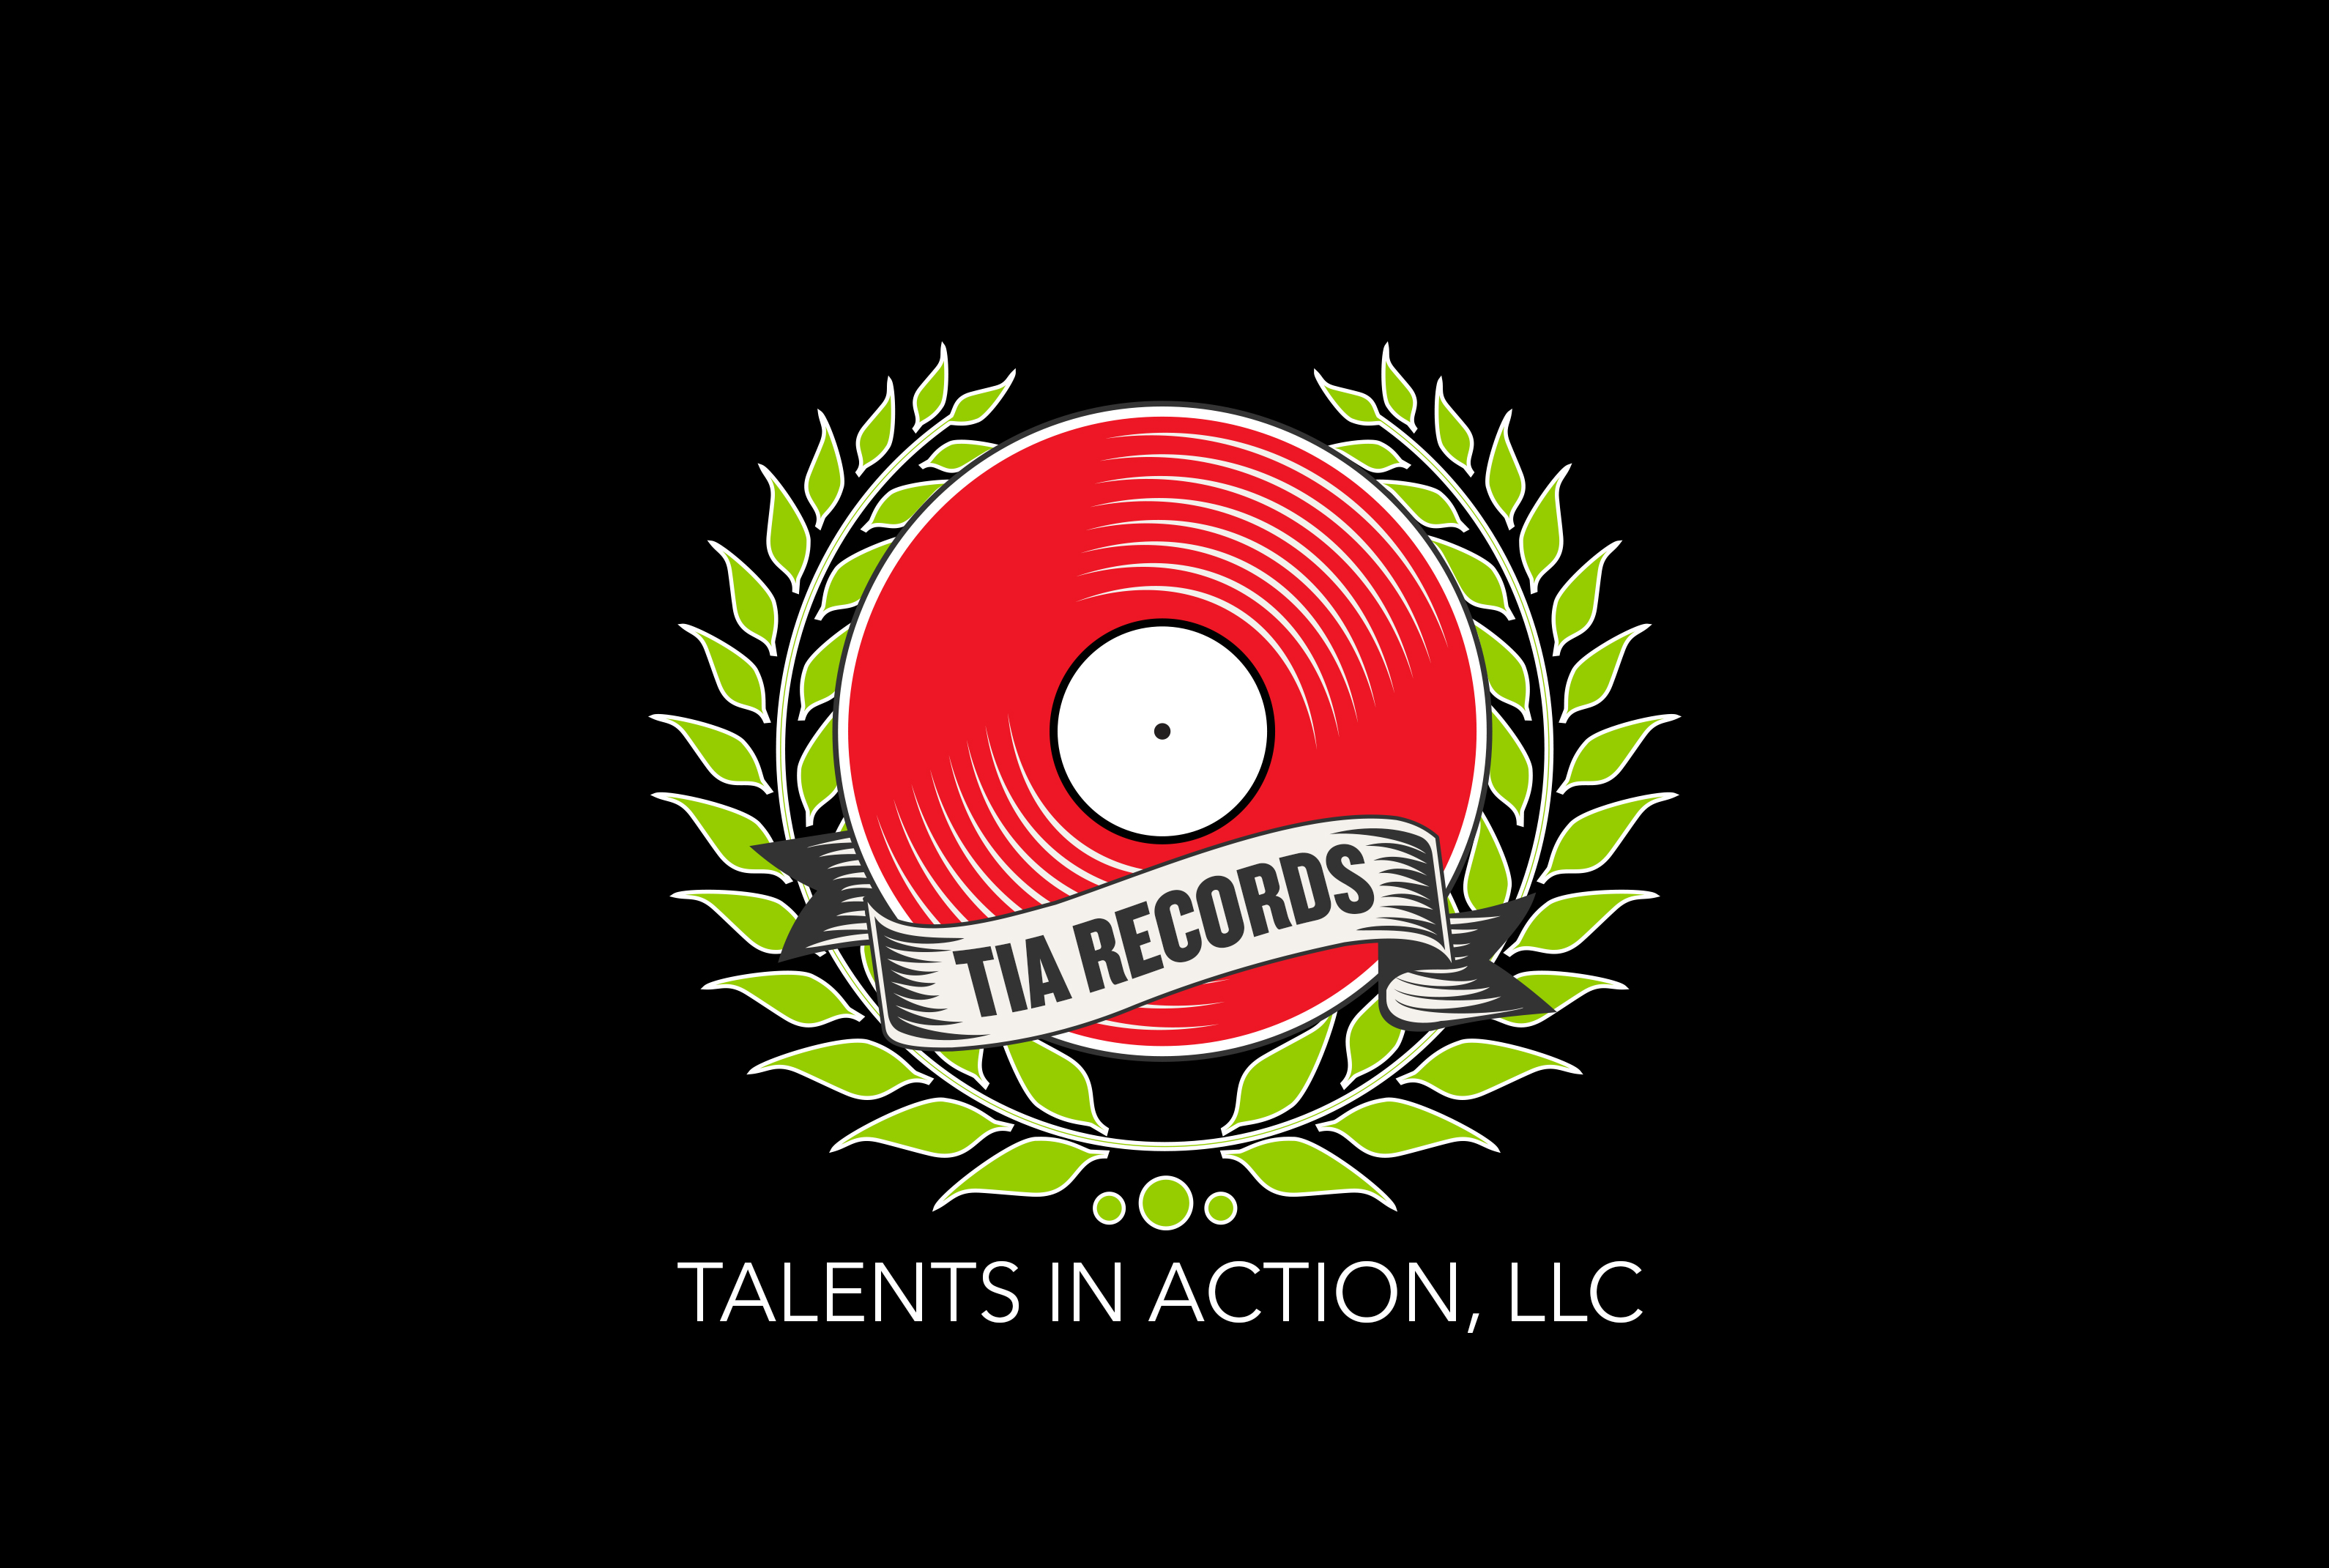 TIA Records